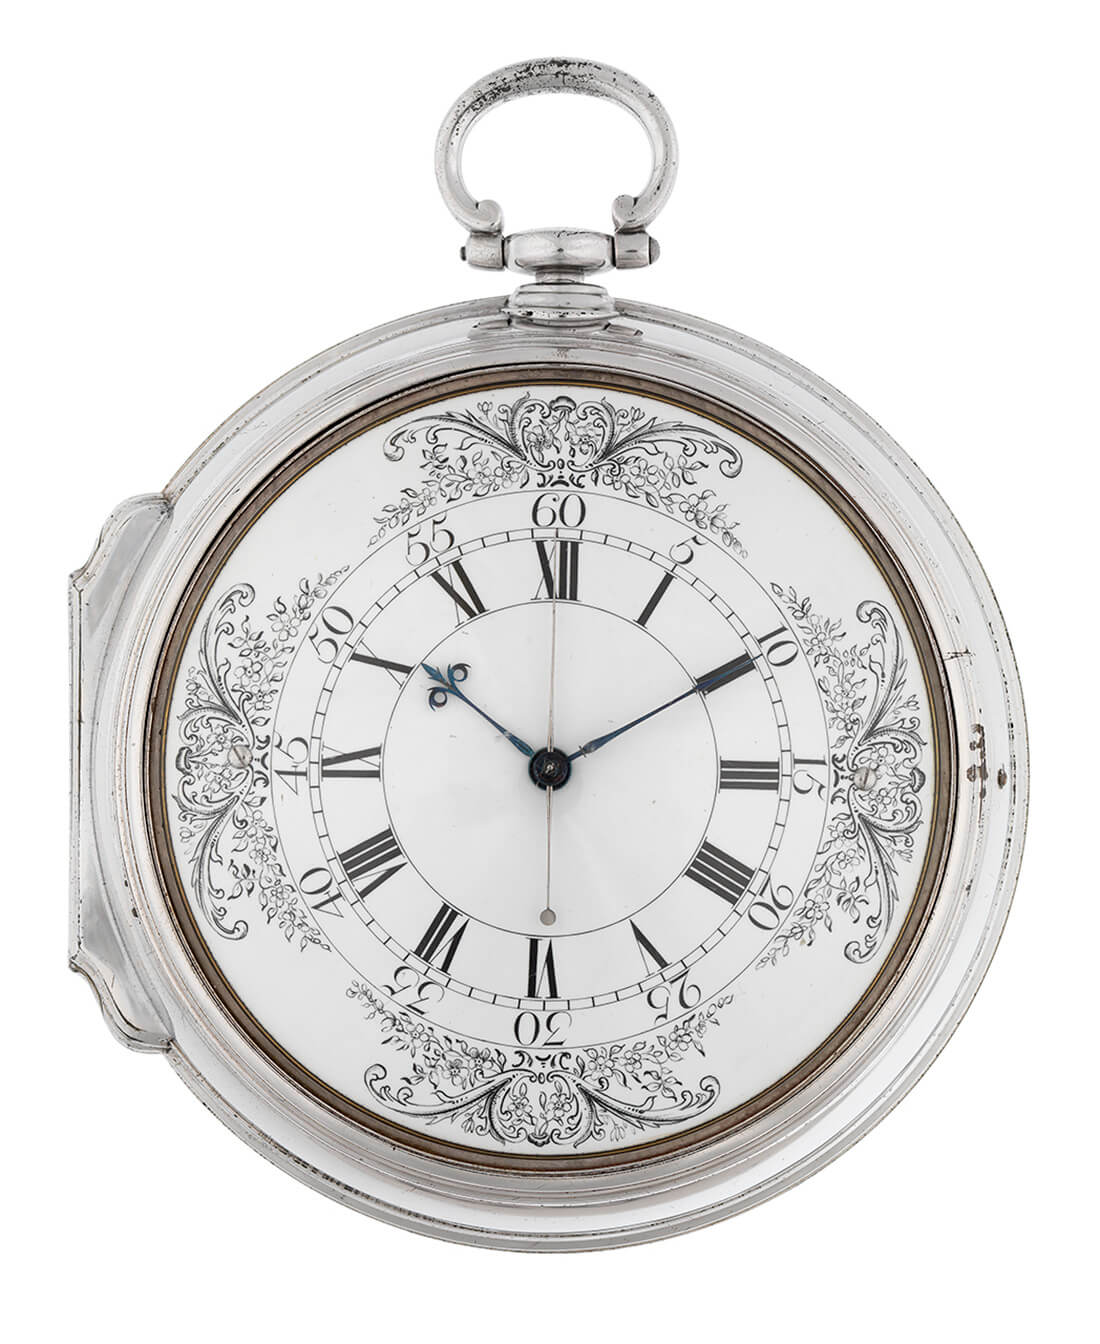 K1: Larcum Kendal's reproduction of Harrison's H4 marine chronometer